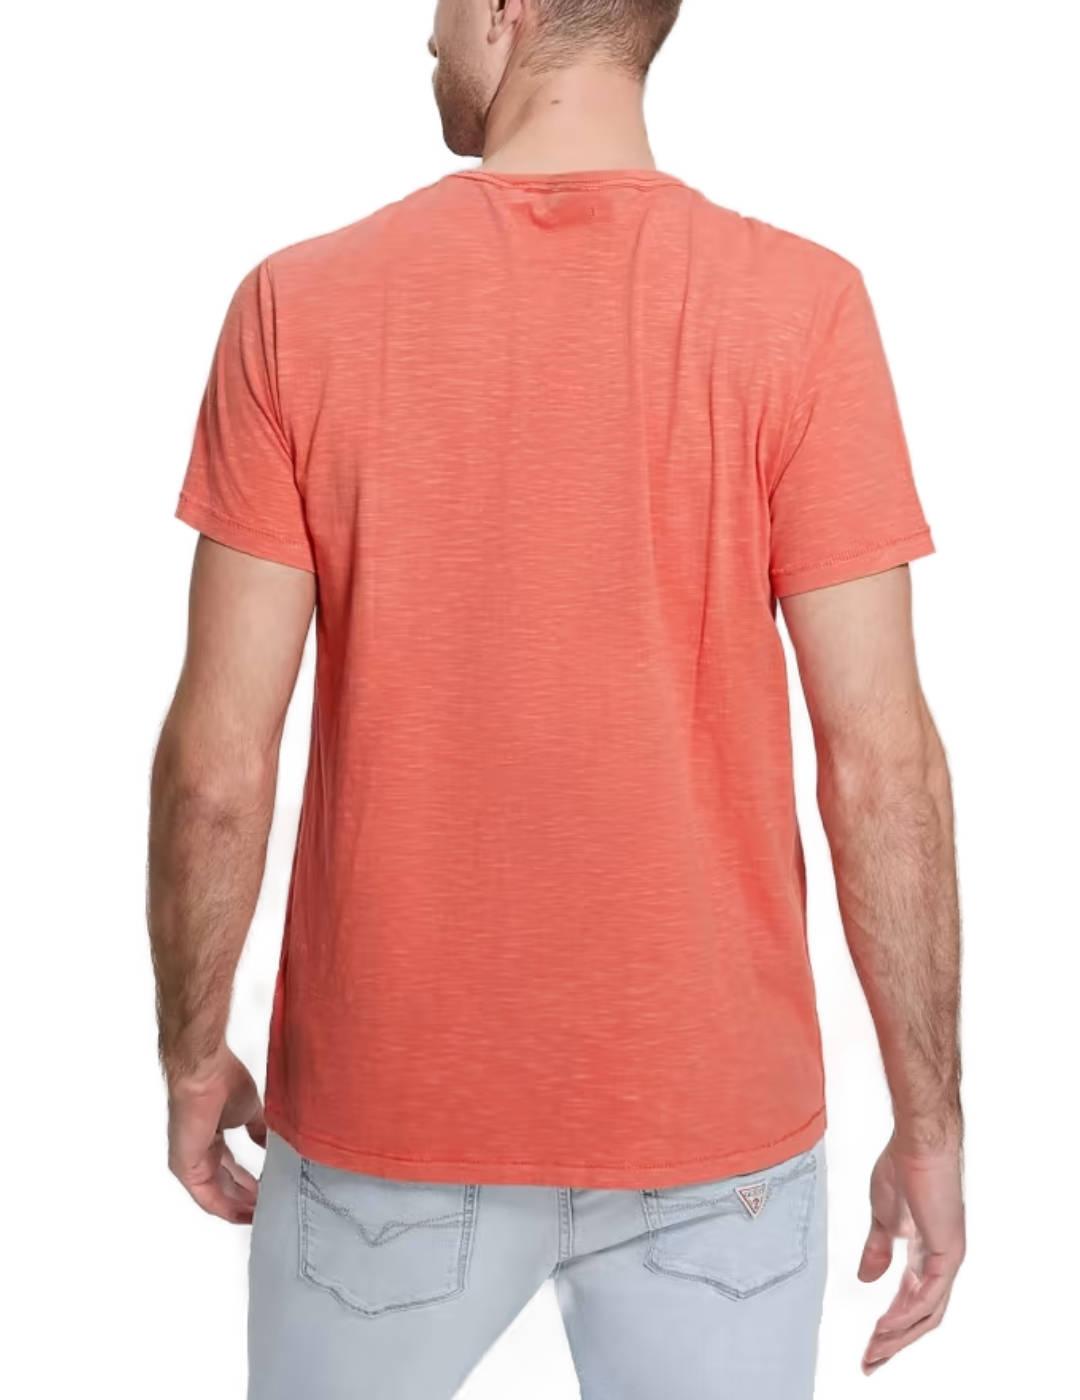 Camiseta Guess Siollan naranja manga corta para hombre